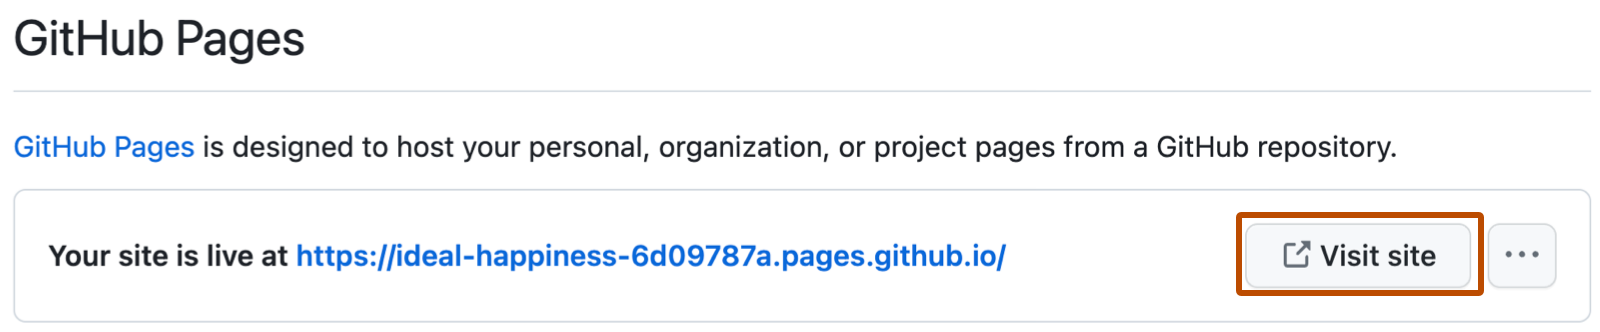 GitHub Pages 确认消息的屏幕截图，其中列出了站点的 URL。 在较长蓝色 URL 的右侧，标有“访问站点”的按钮用深橙色框出。